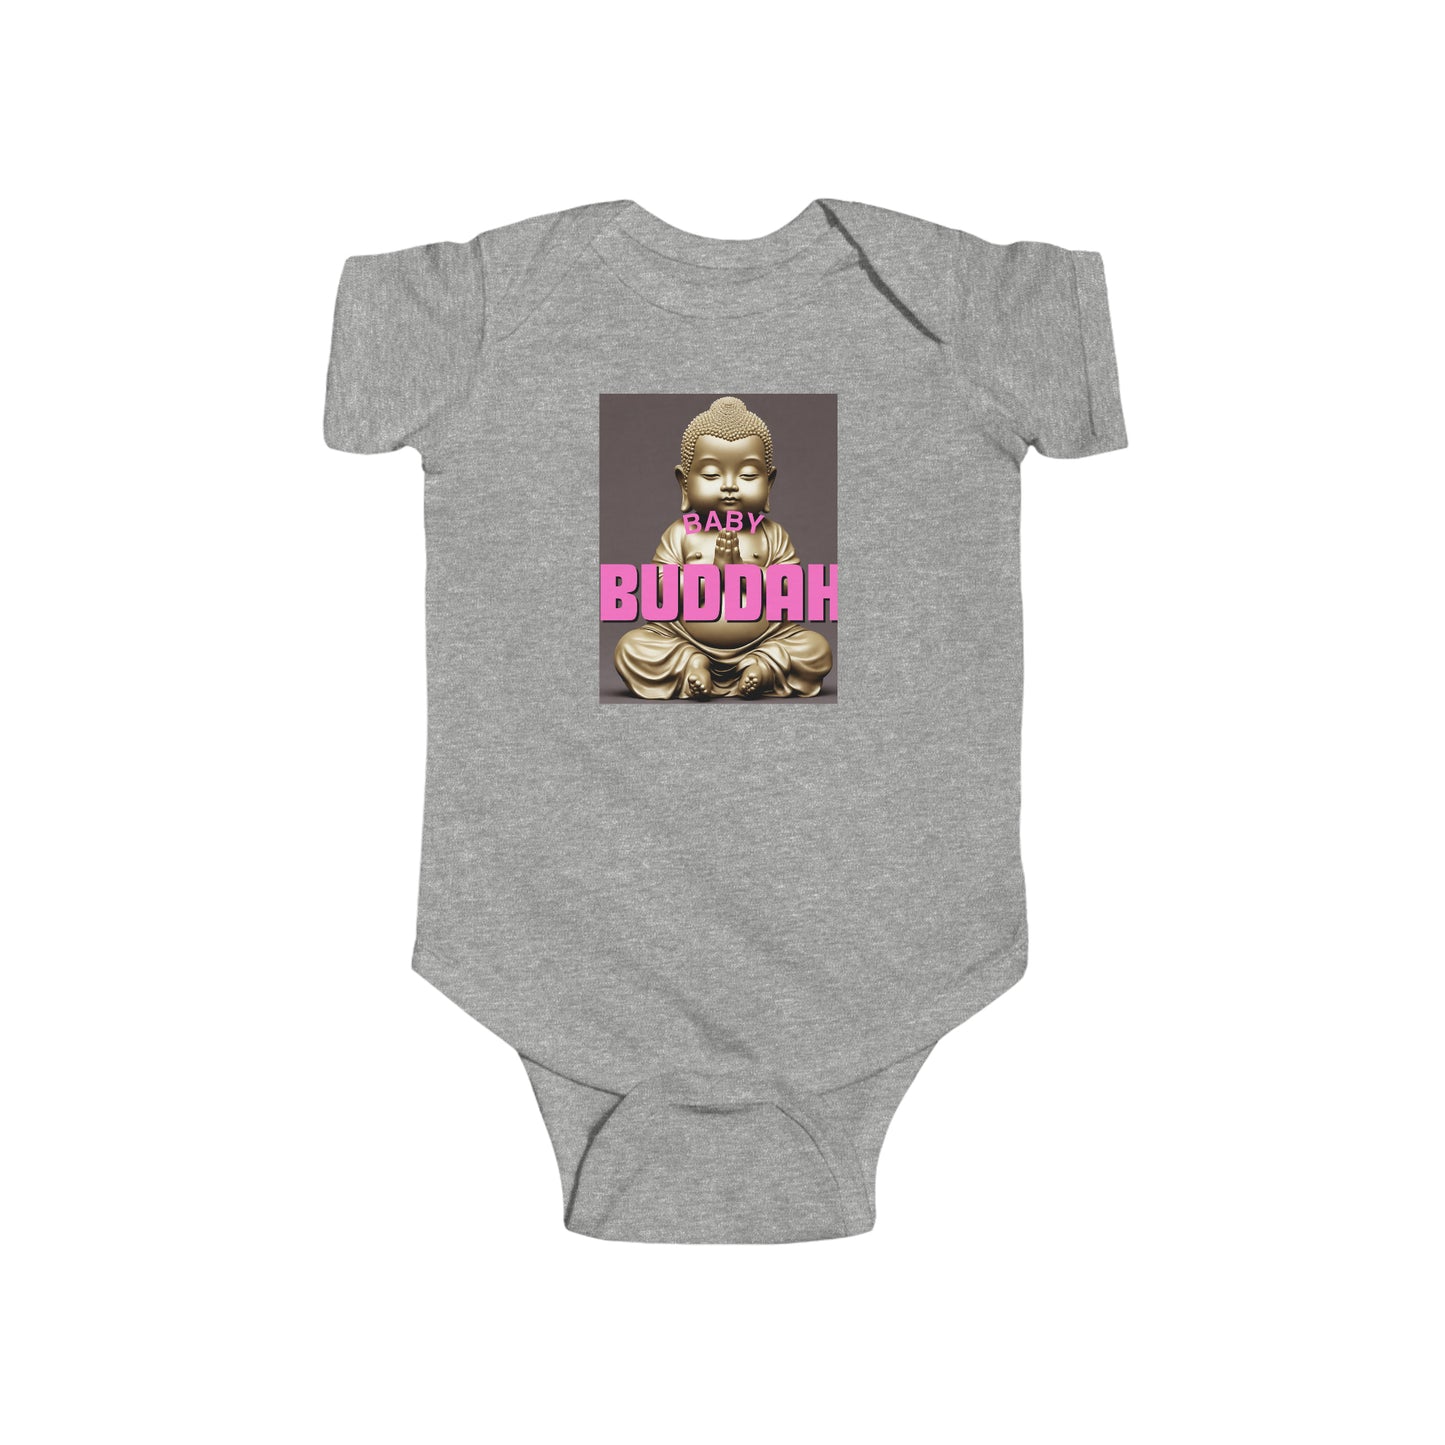 Infant Baby Buddah Jersey Bodysuit